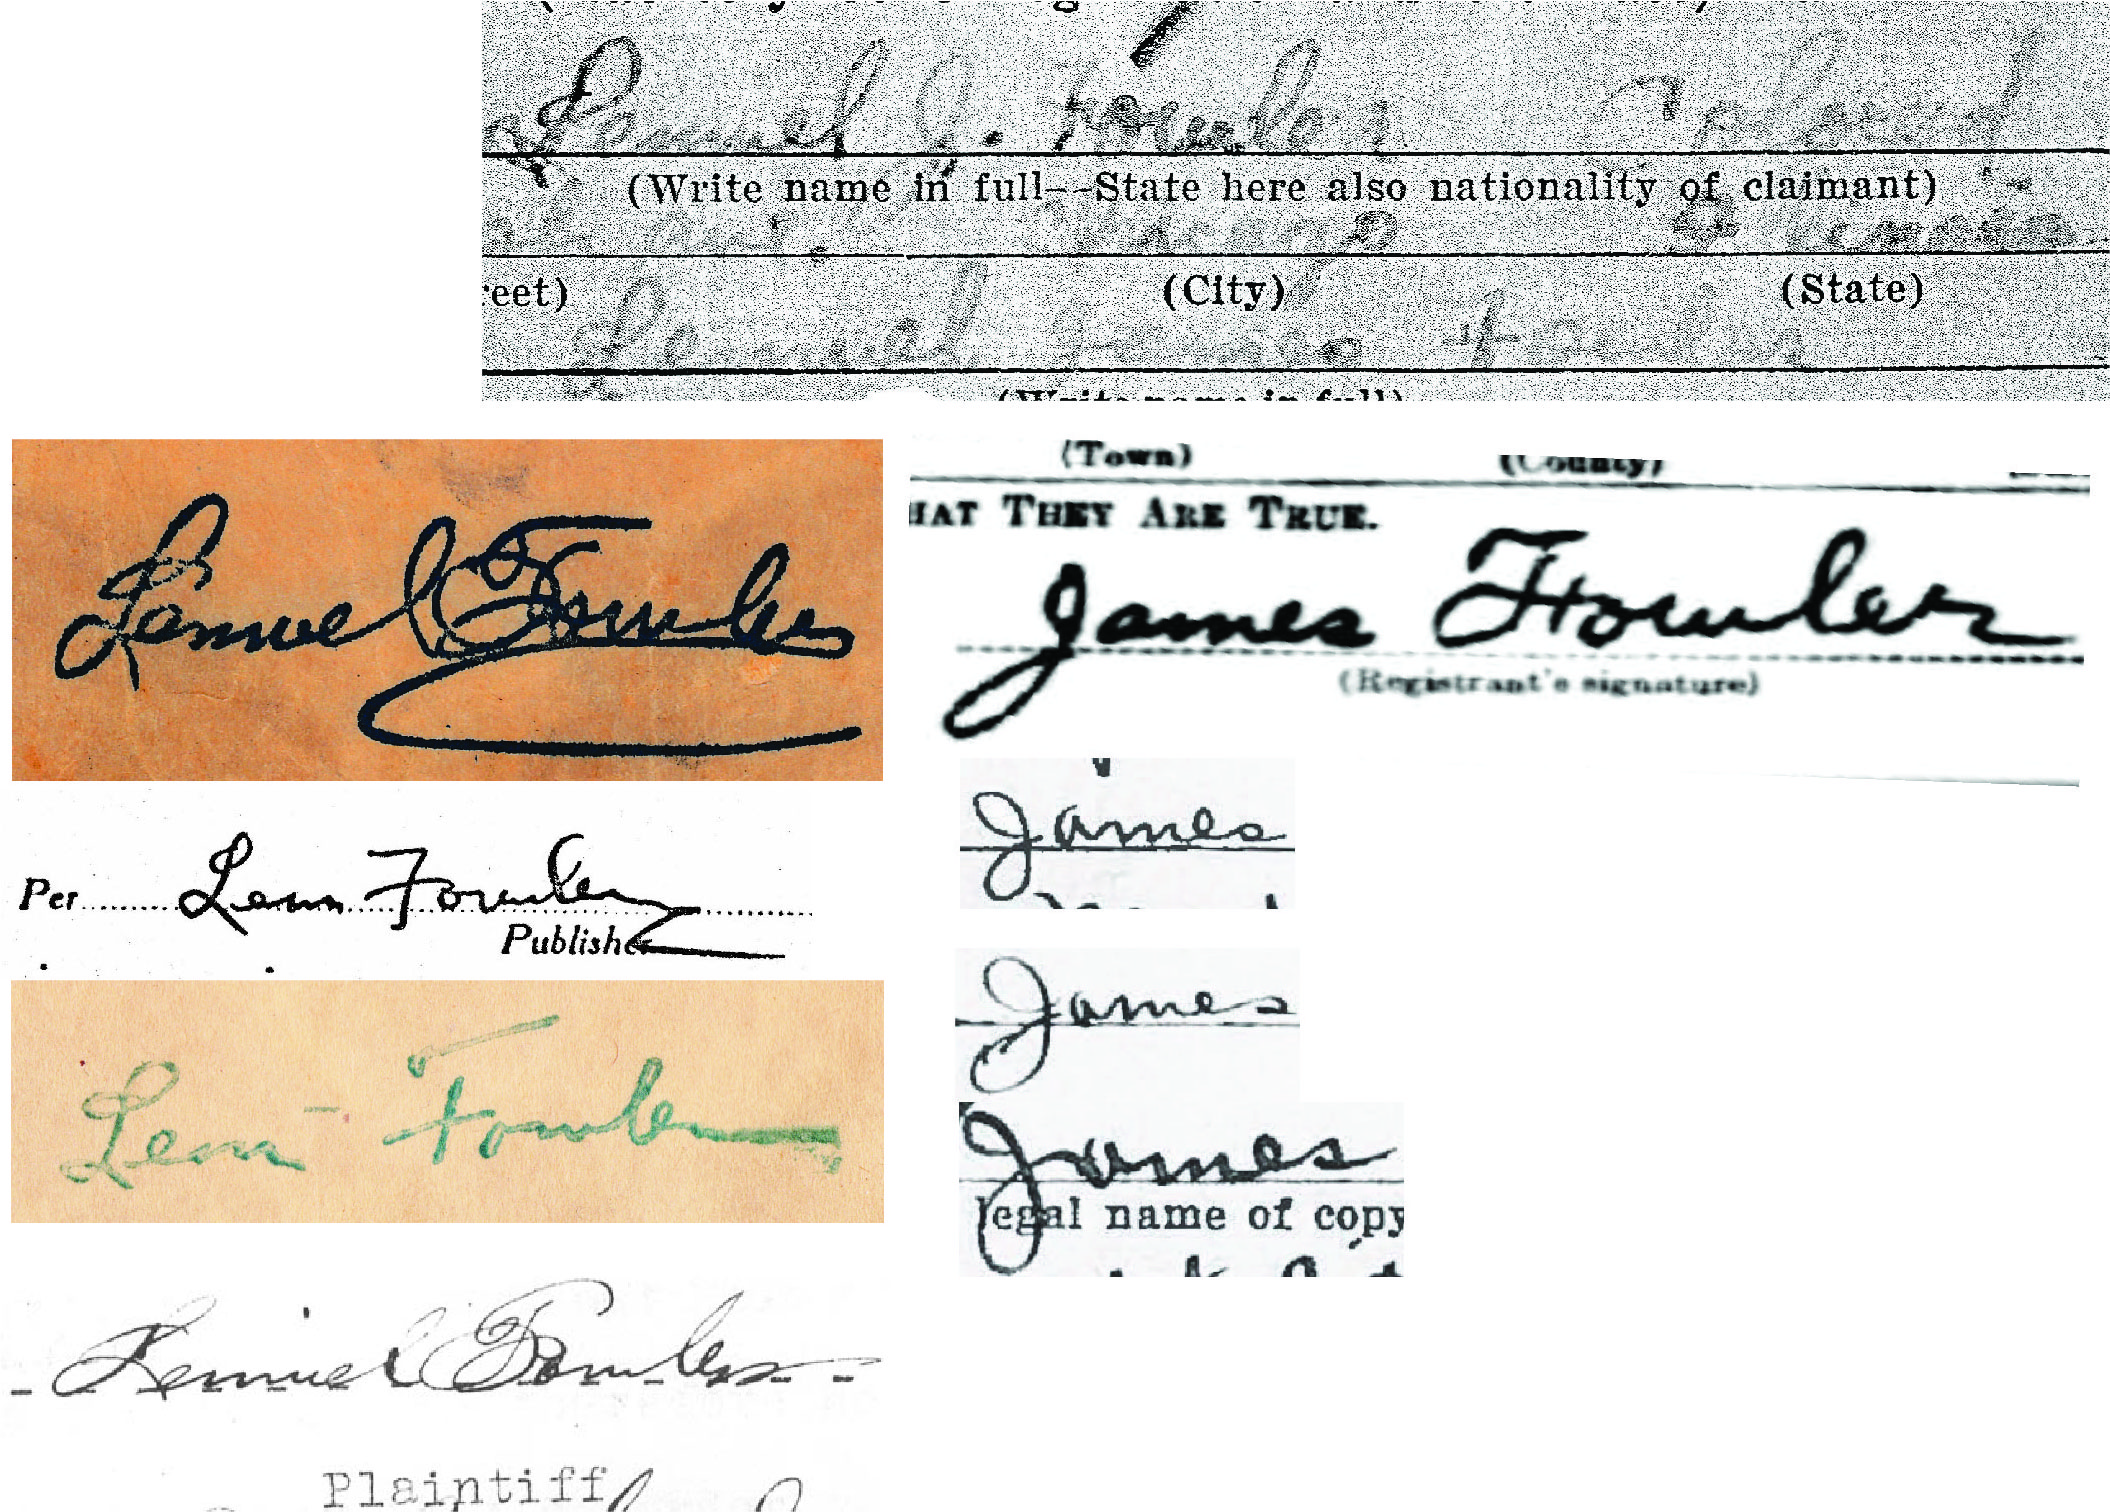 Fowler signatures through the 1920s